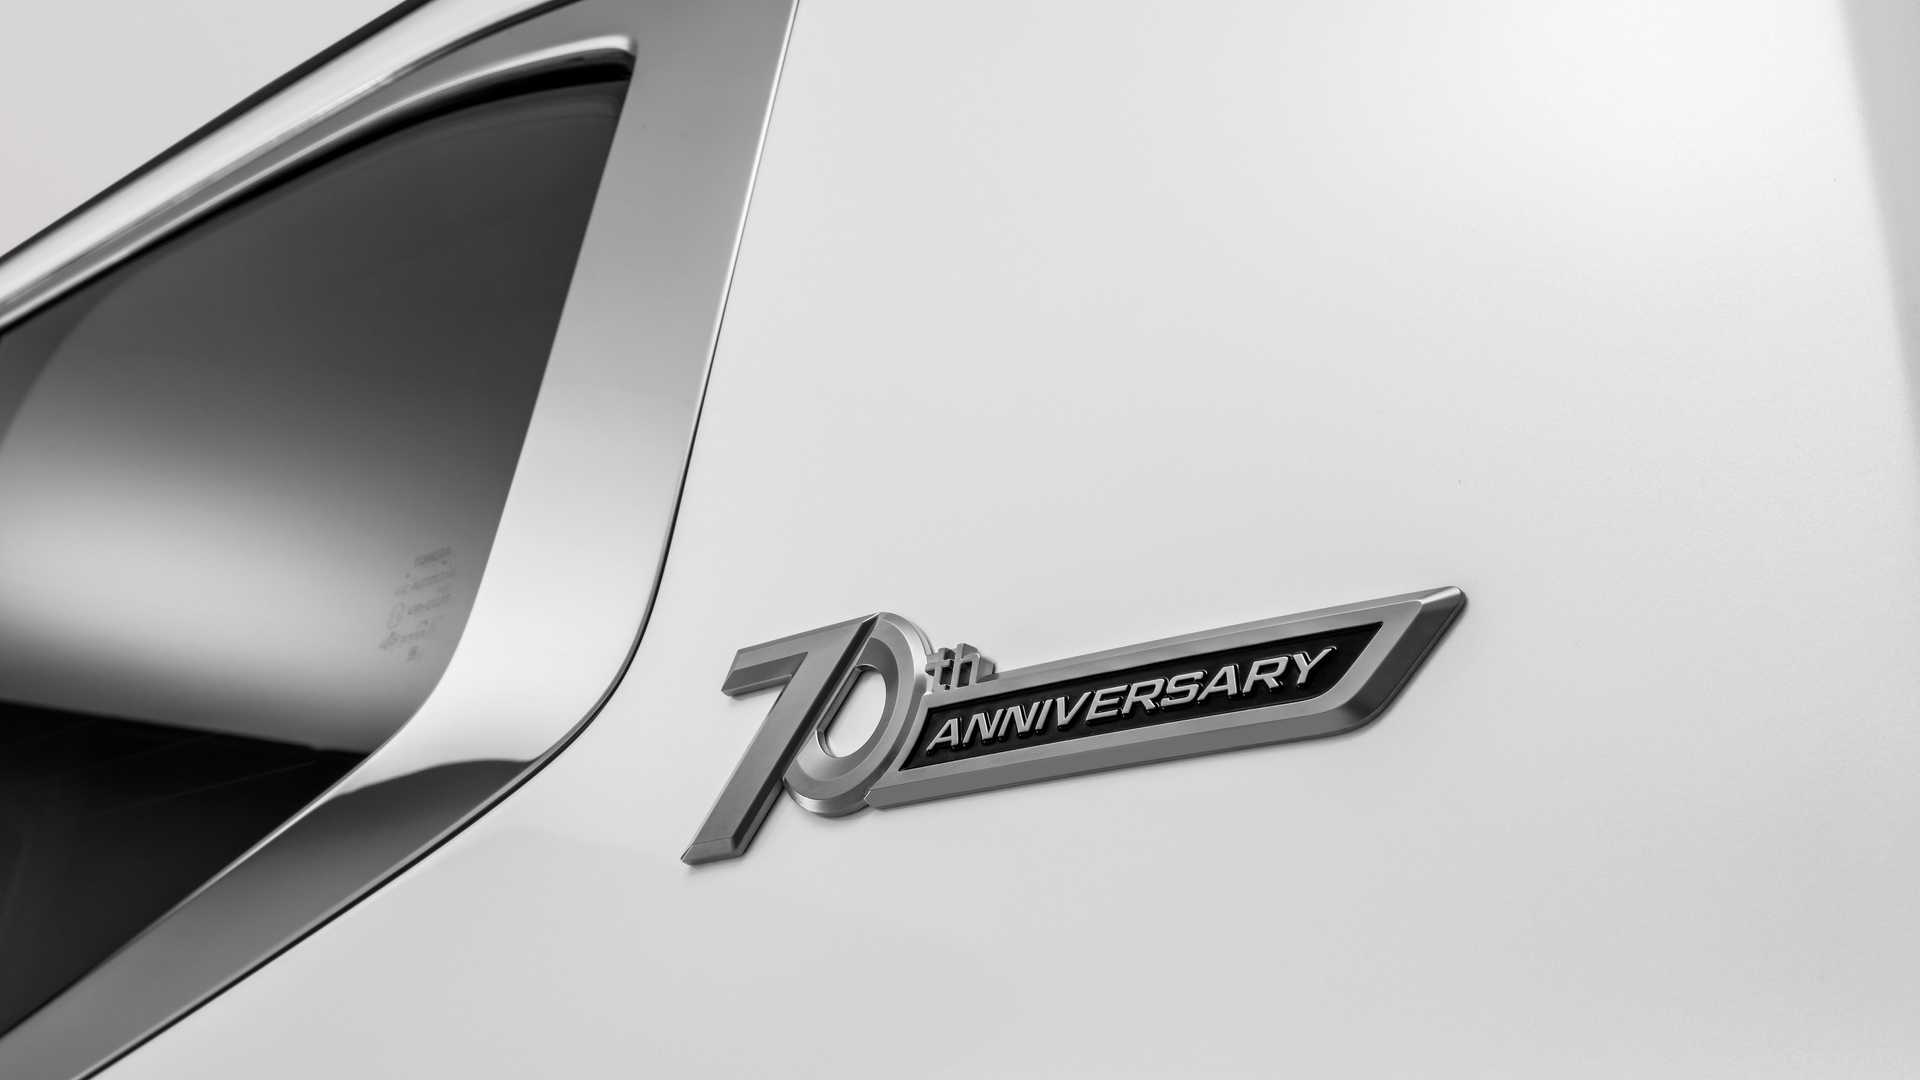 Toyota Land Cruiser 2022 تویوتا لندکروزر 300 نماد 70 سالگی